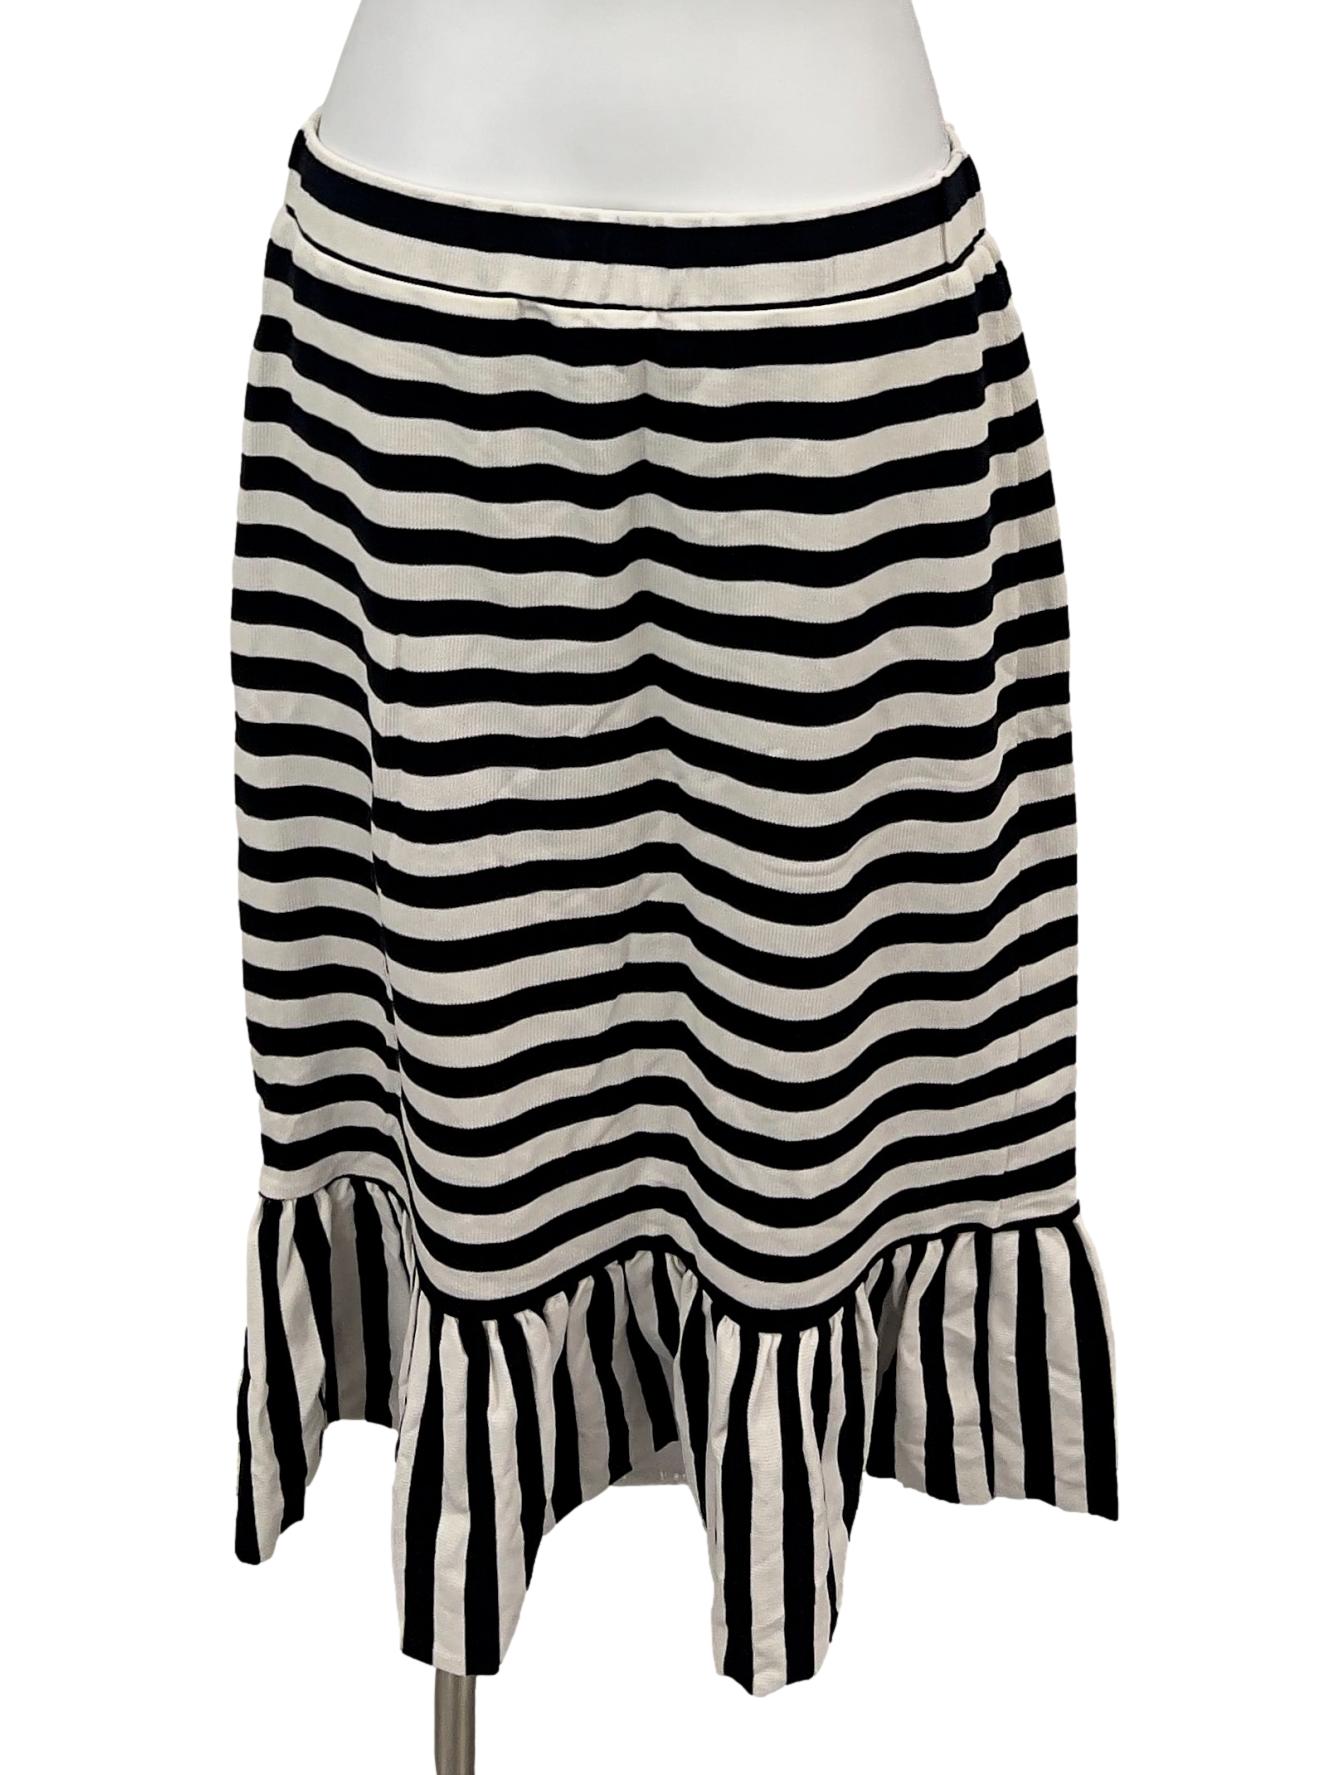 White And Black Striped Skirt